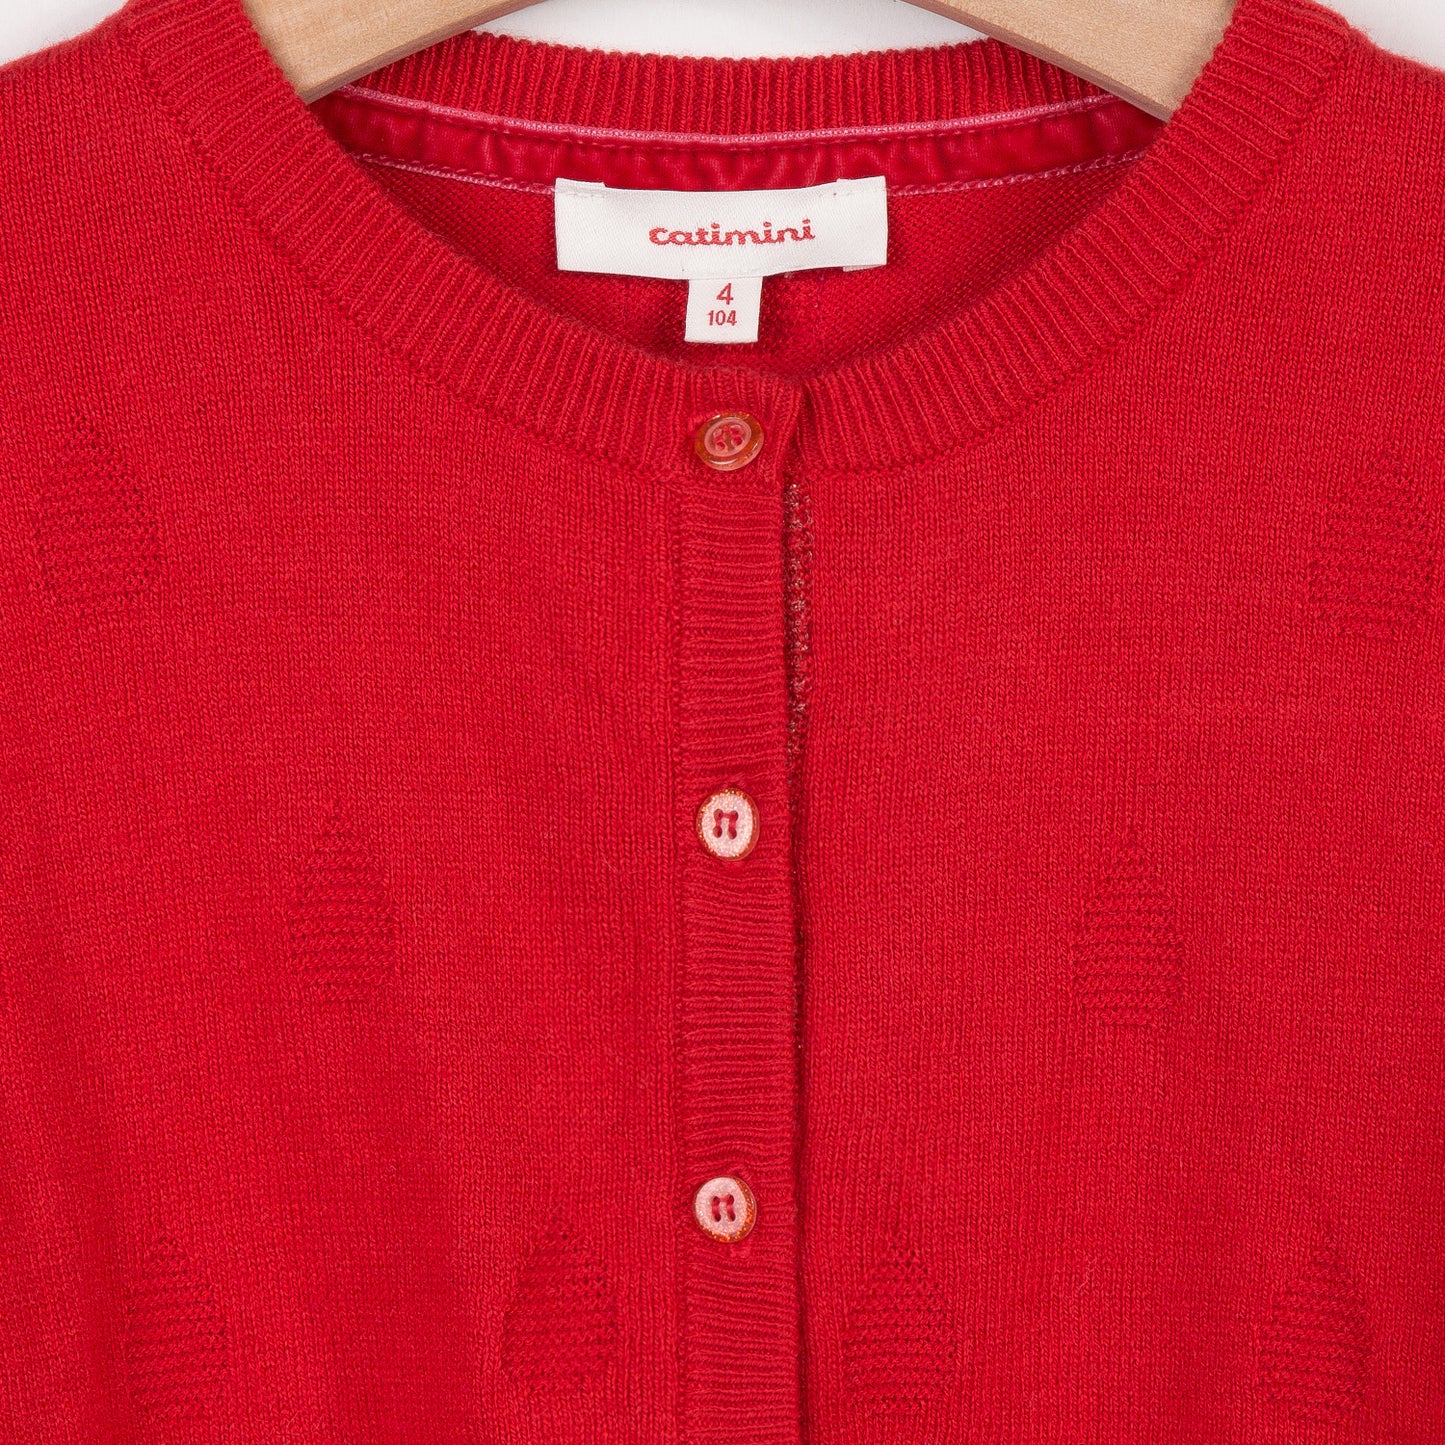 Catimini Textured Knit Cardigan (Size 5)